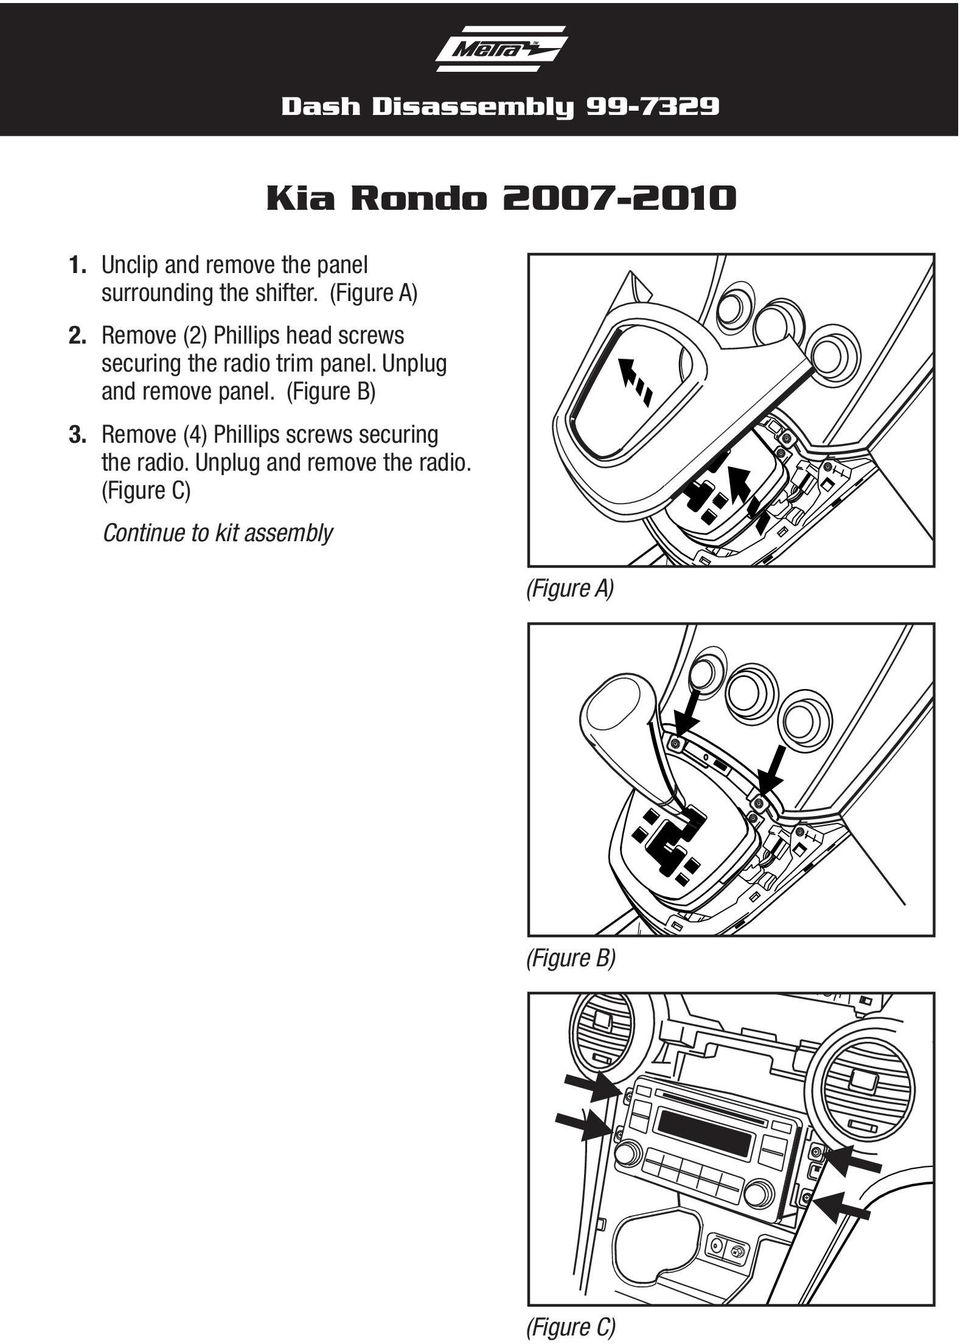 Remove (2) Phillips head screws securing the radio trim panel. Unplug and remove panel.